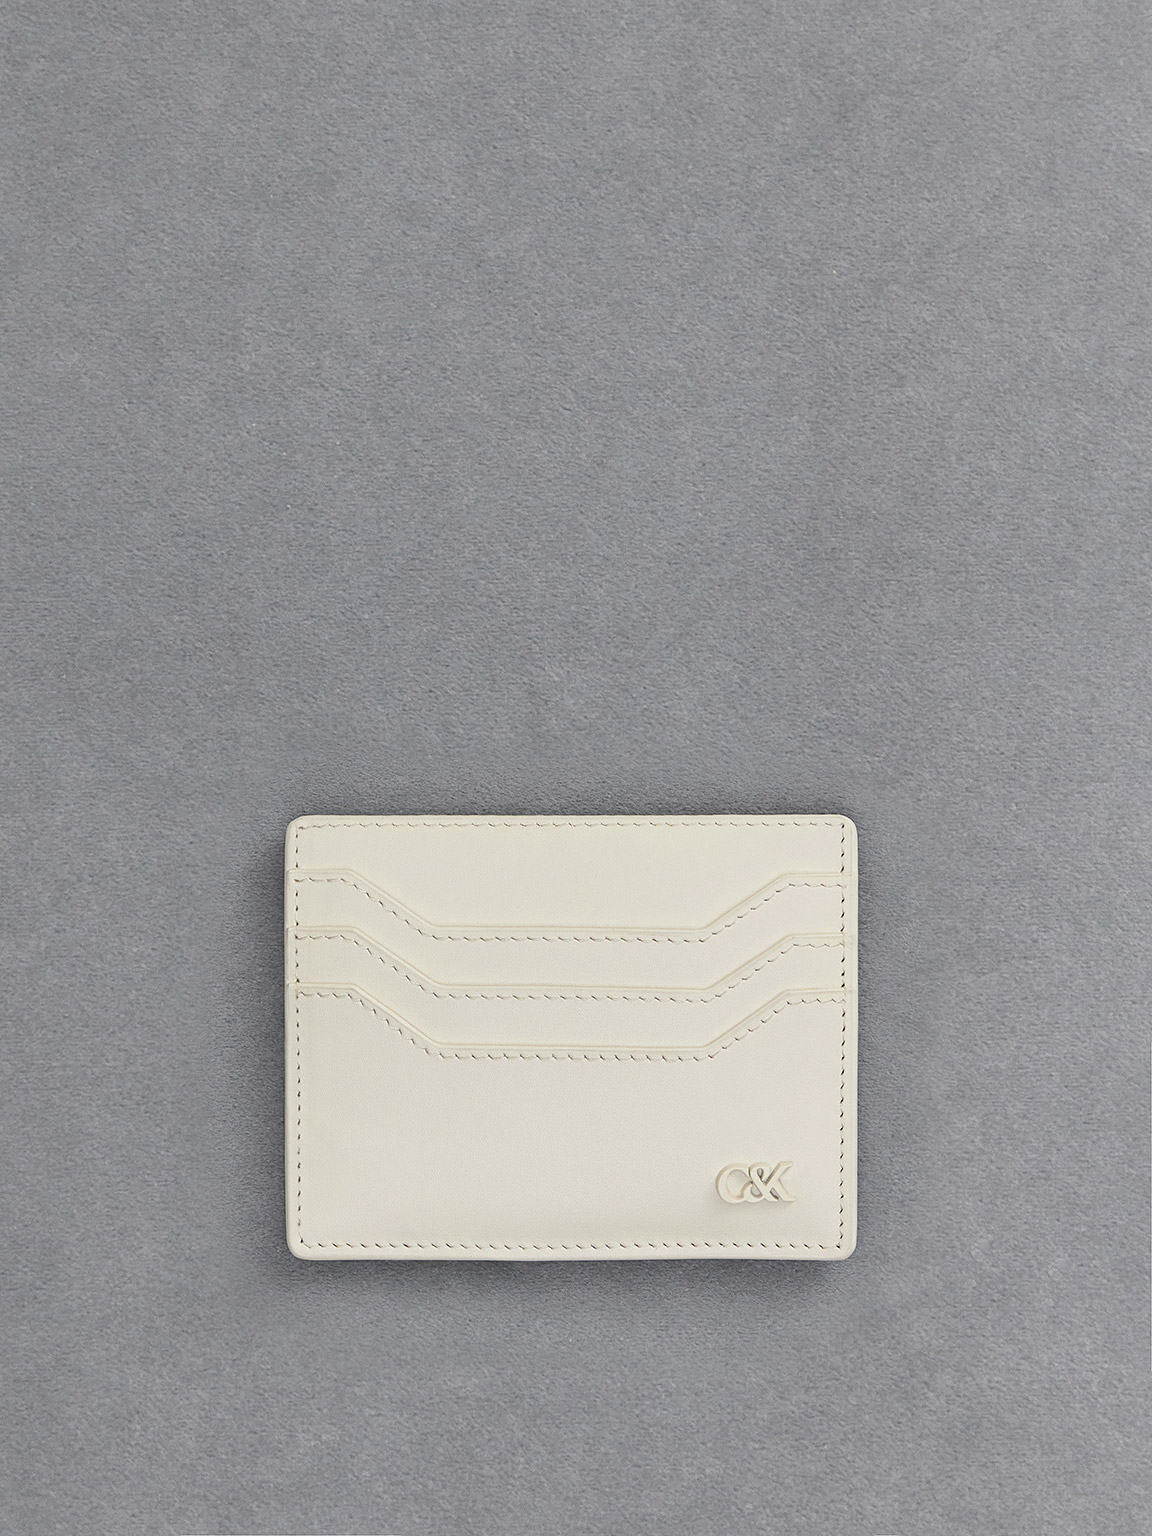 White Leather Multi-Slot Card Holder - CHARLES & KEITH PH